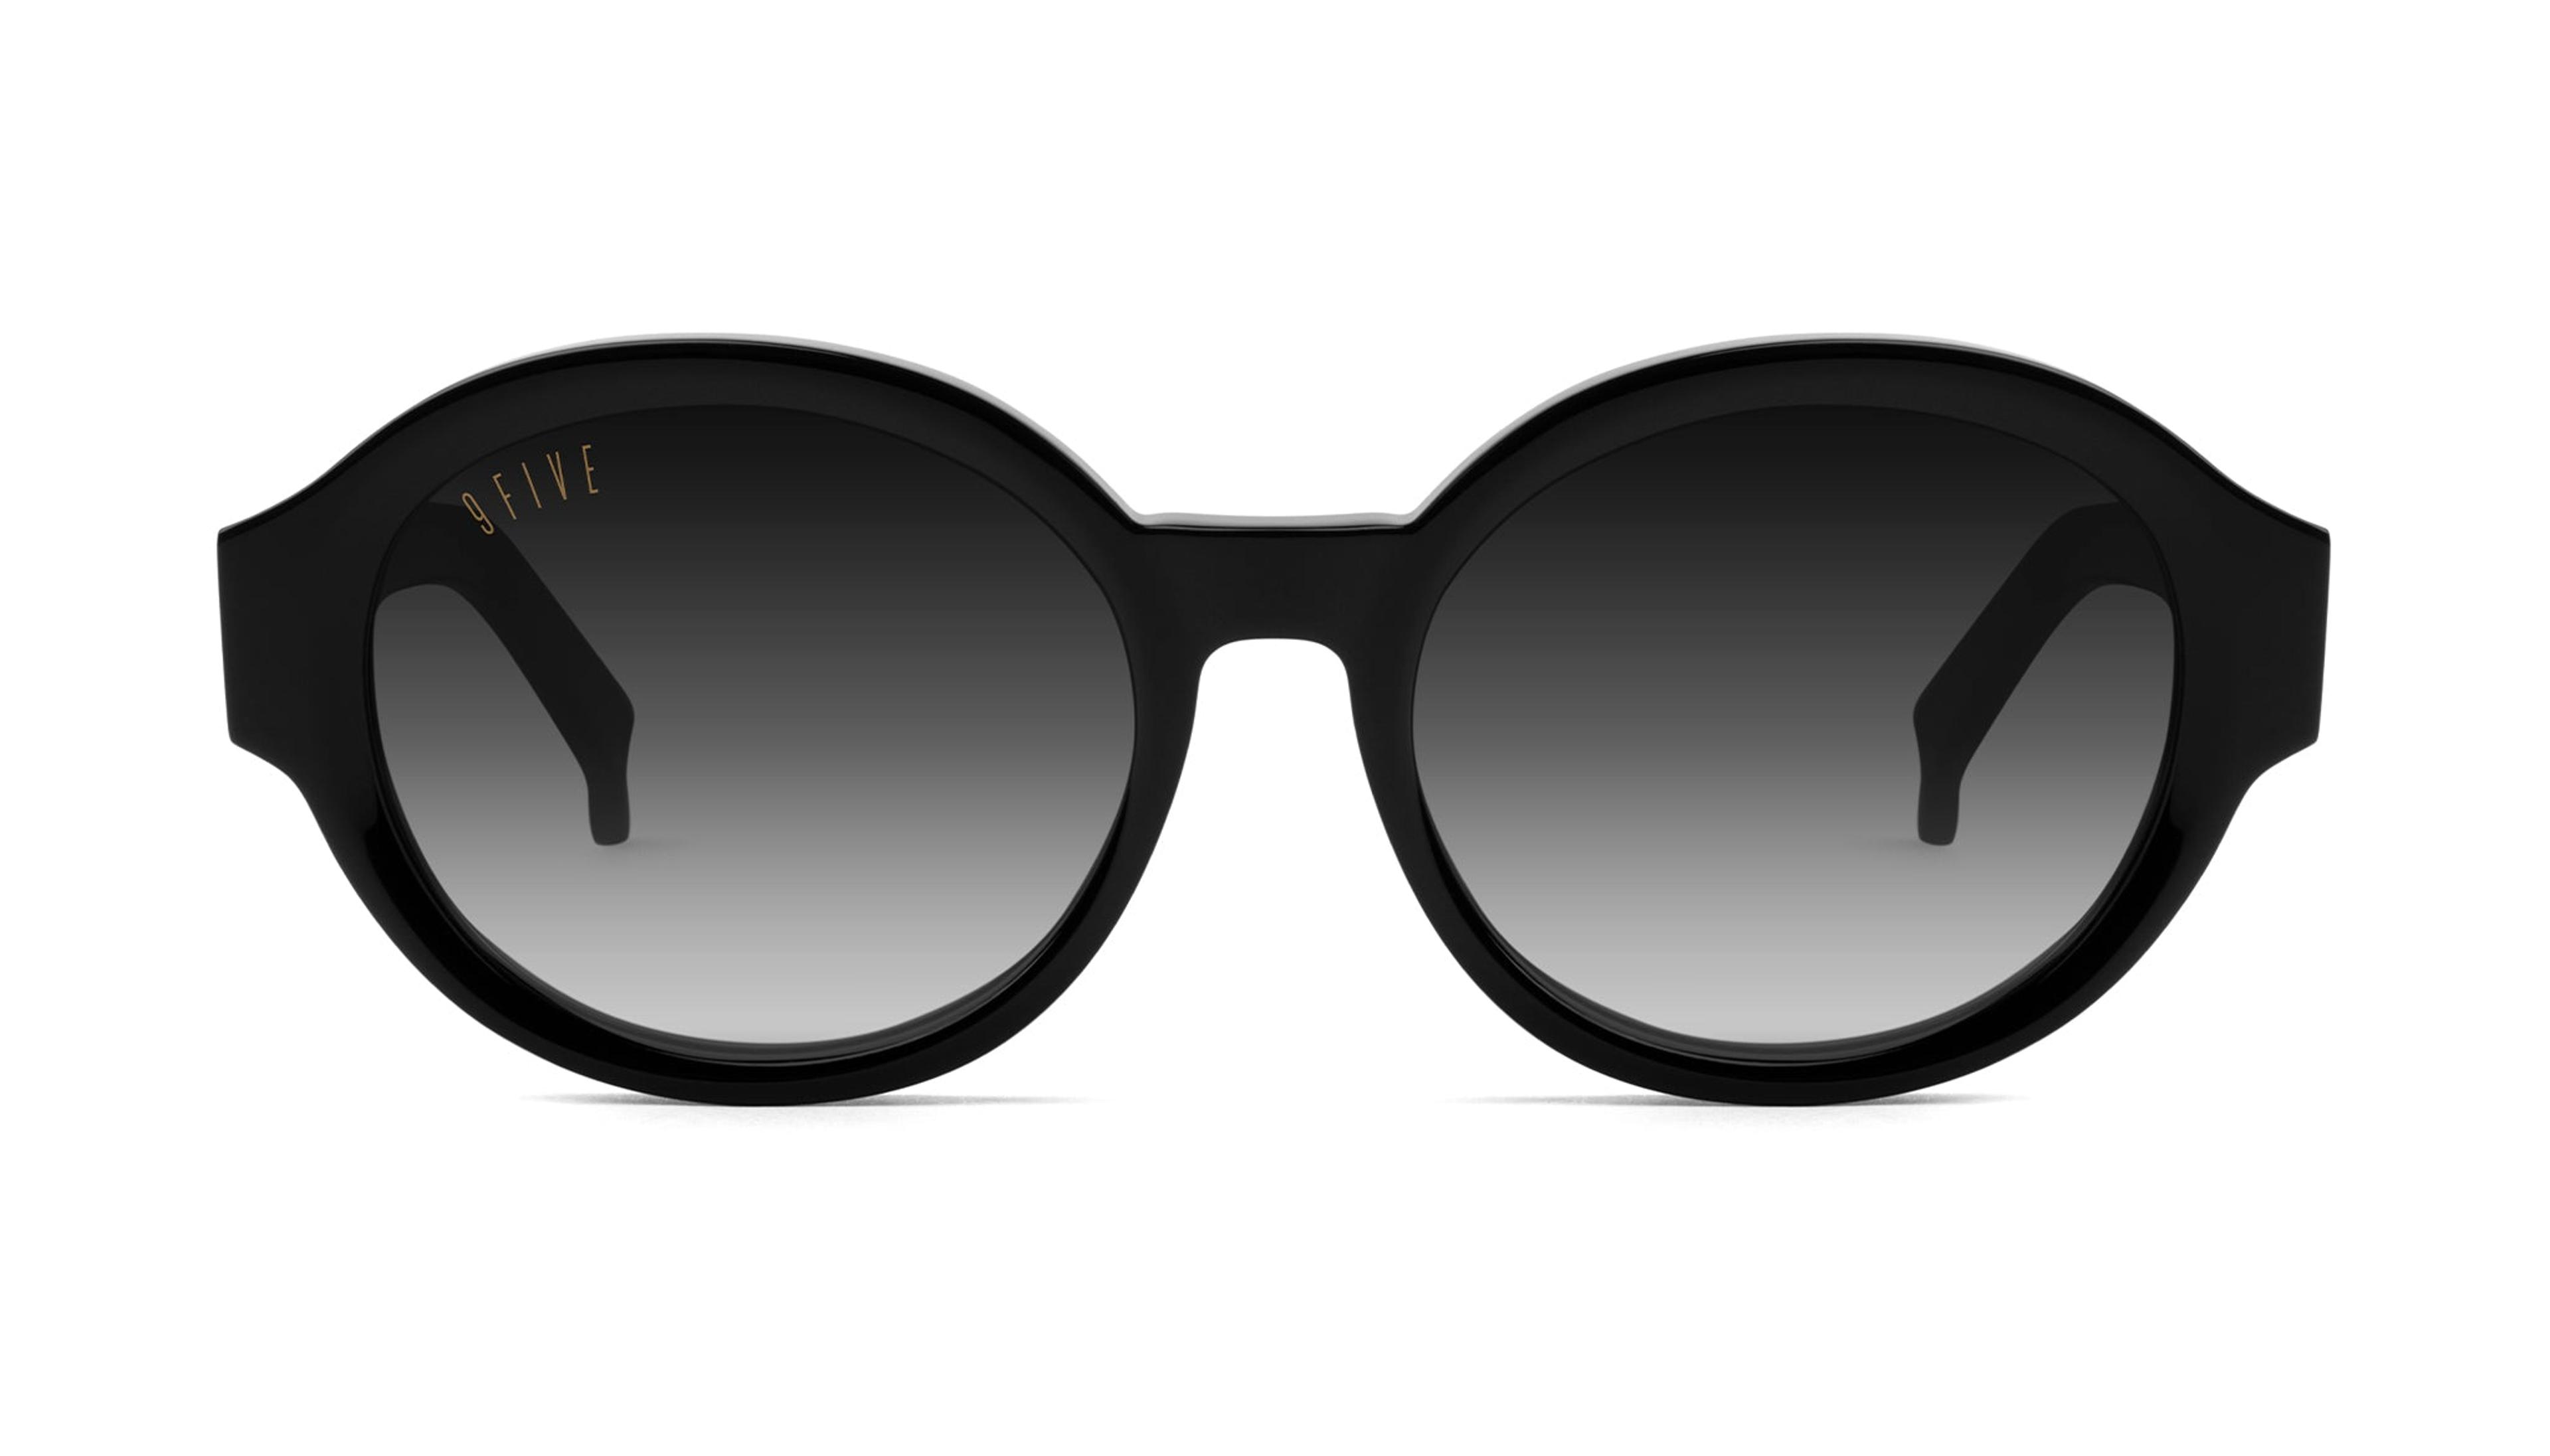 Alternate View 1 of 9FIVE Drips Black & 24K Gold - Gradient Sunglasses